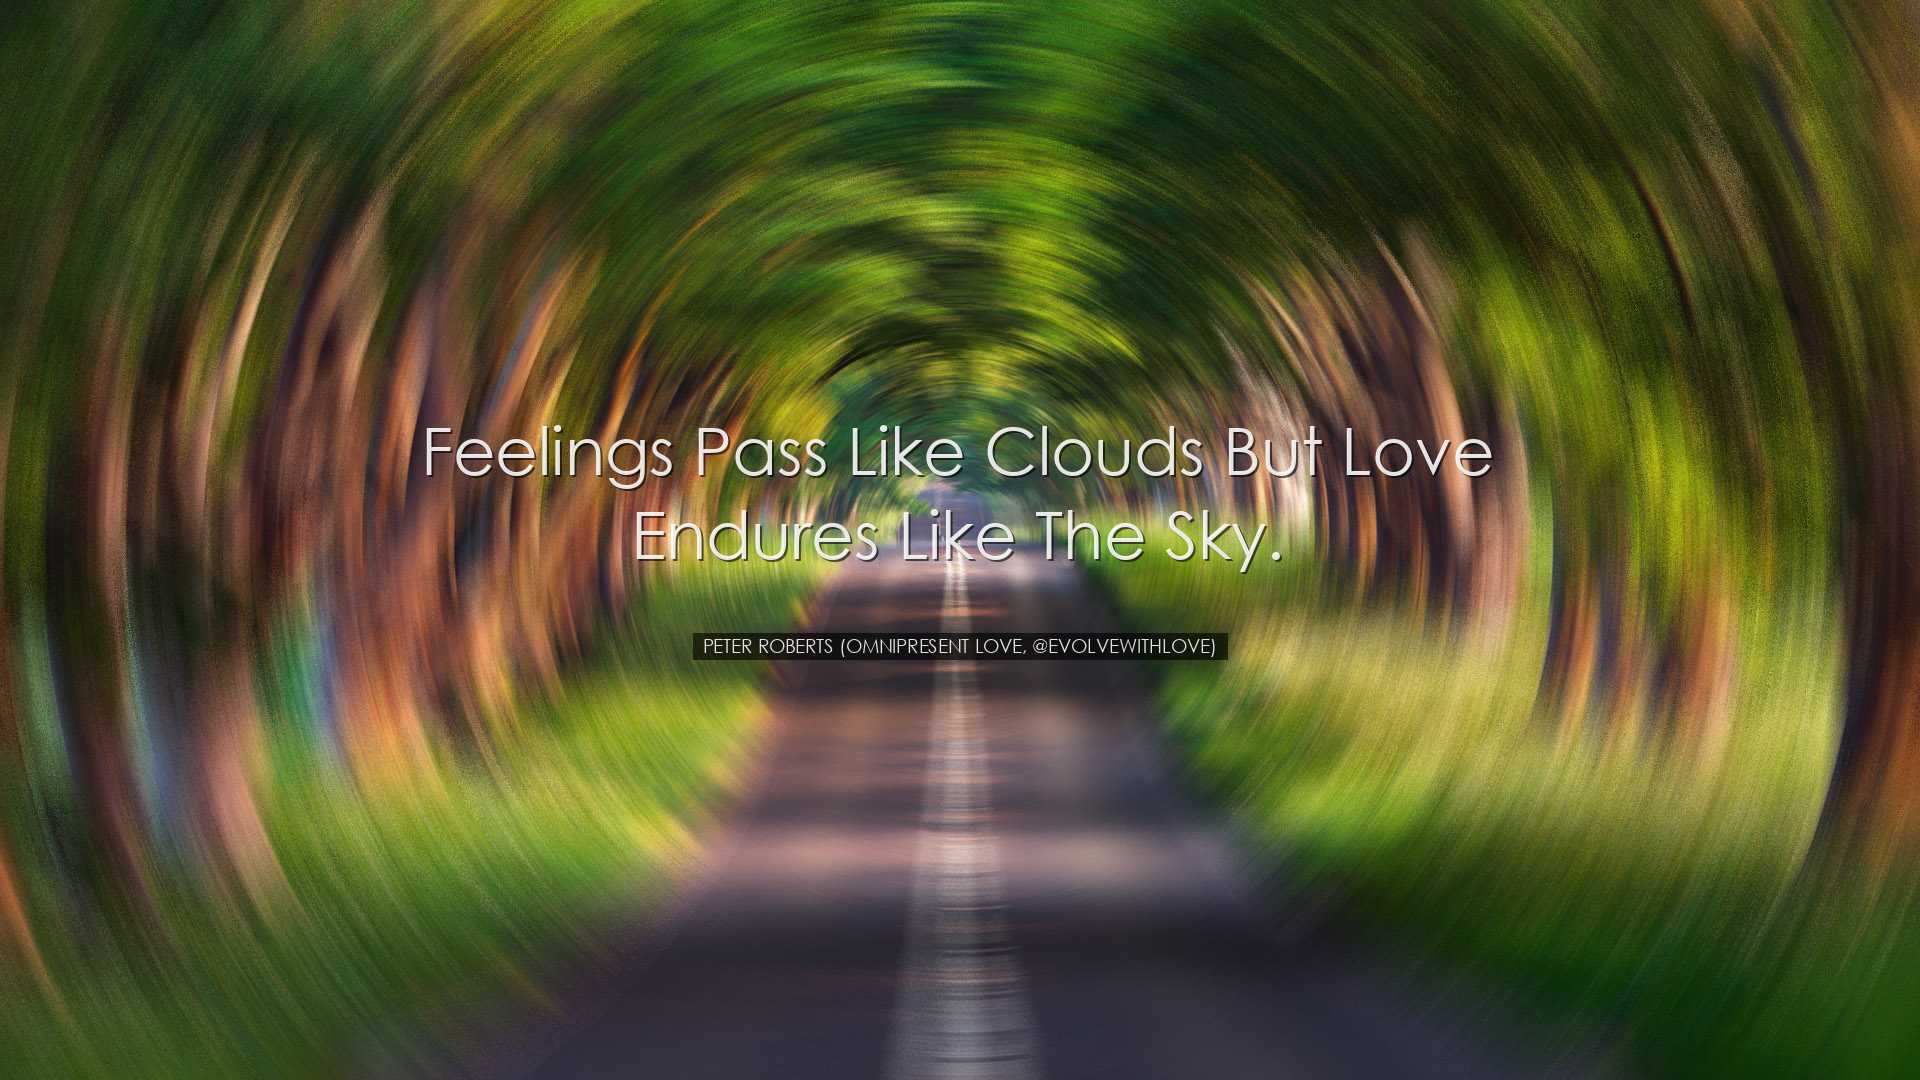 Feelings pass like clouds but love endures like the sky. - Peter R